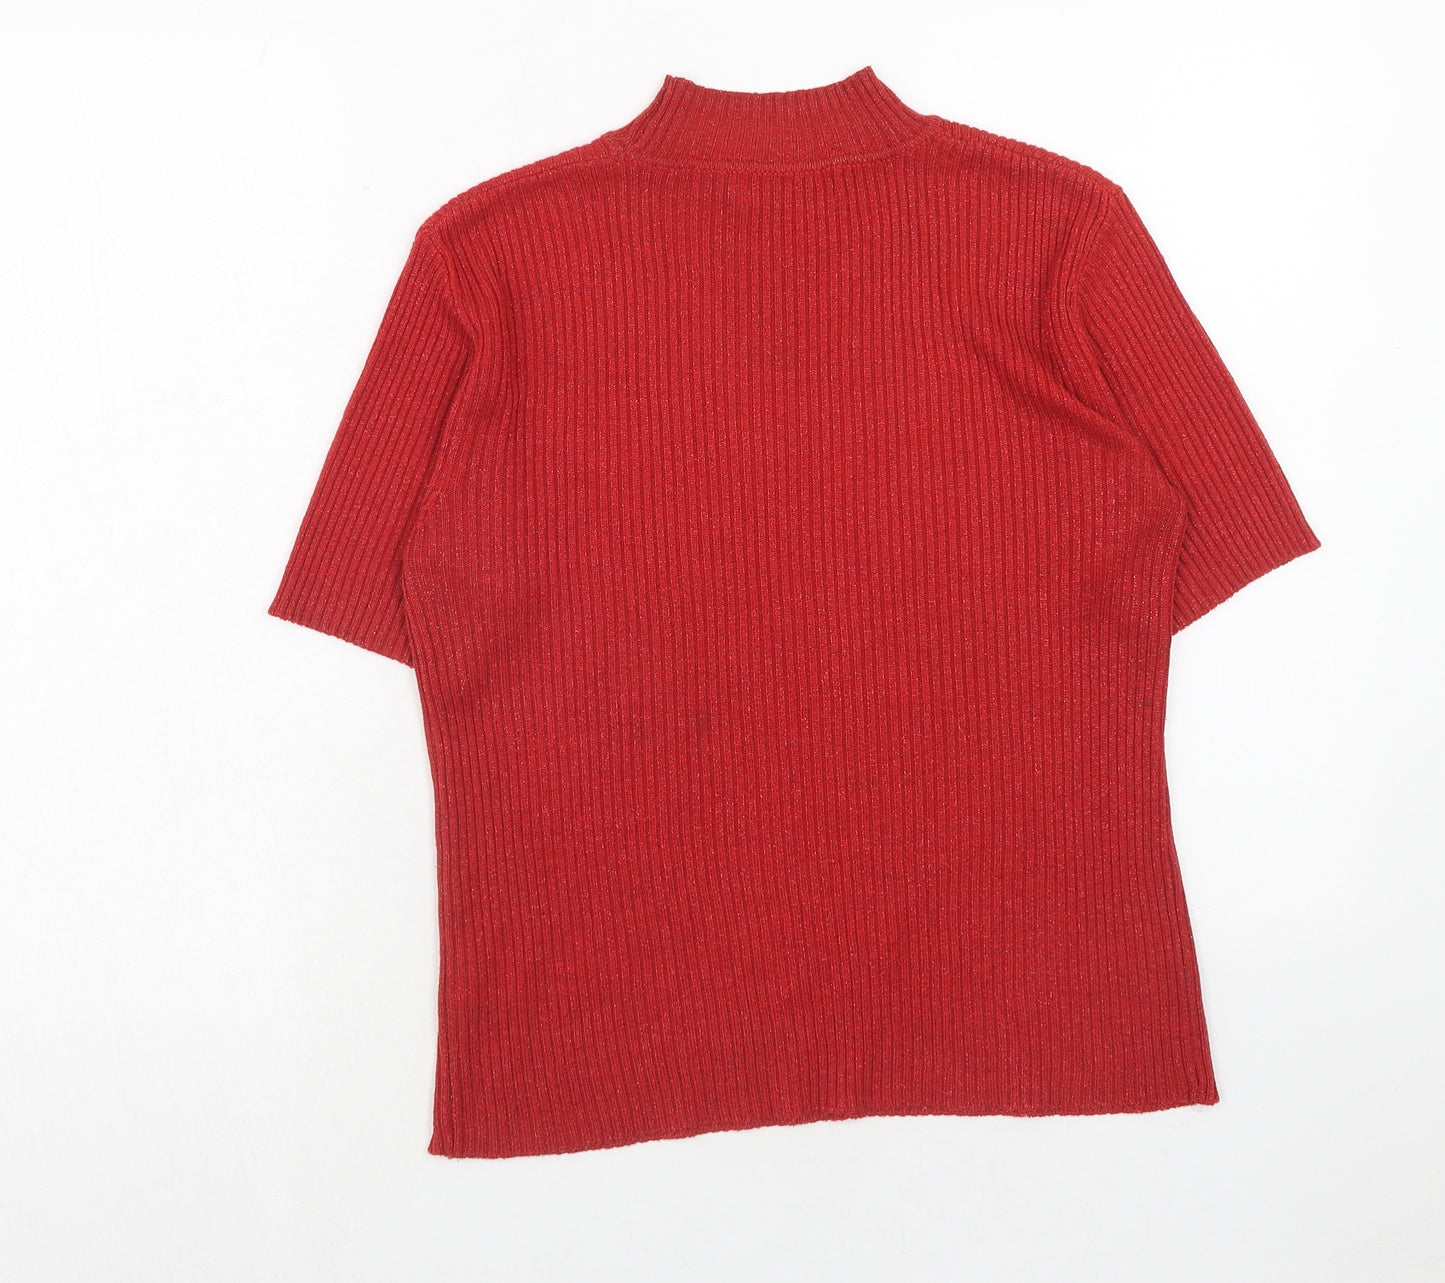 Bonmarché Womens Red Acrylic Basic T-Shirt Size XL Mock Neck